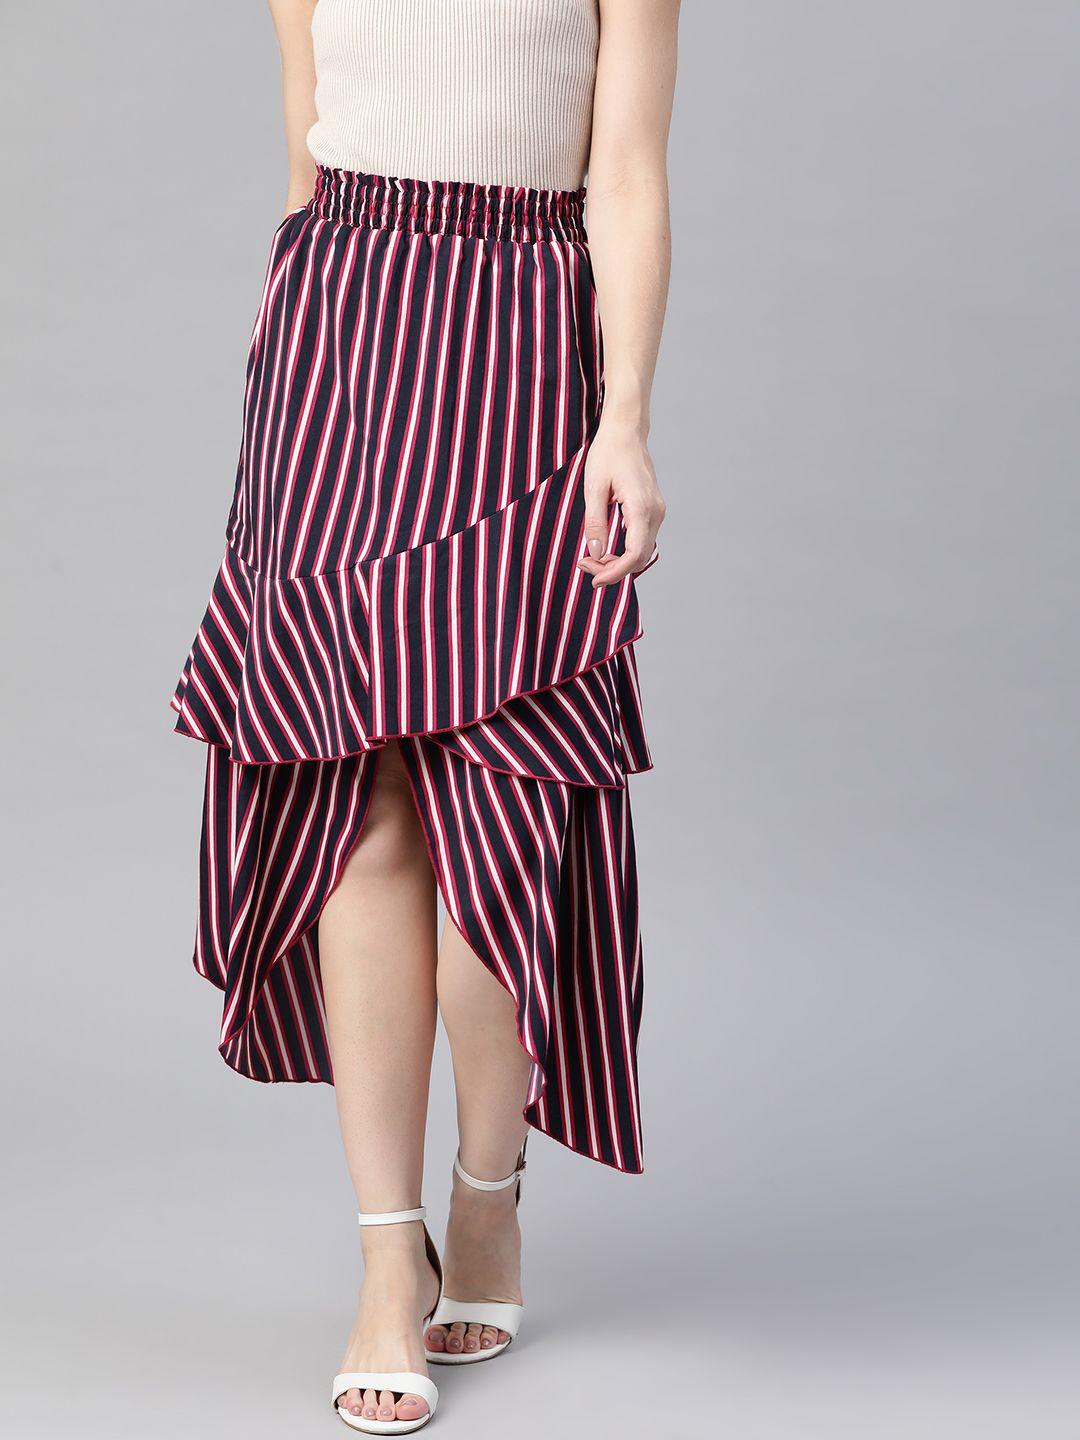 kassually women black & pink striped tulip skirt